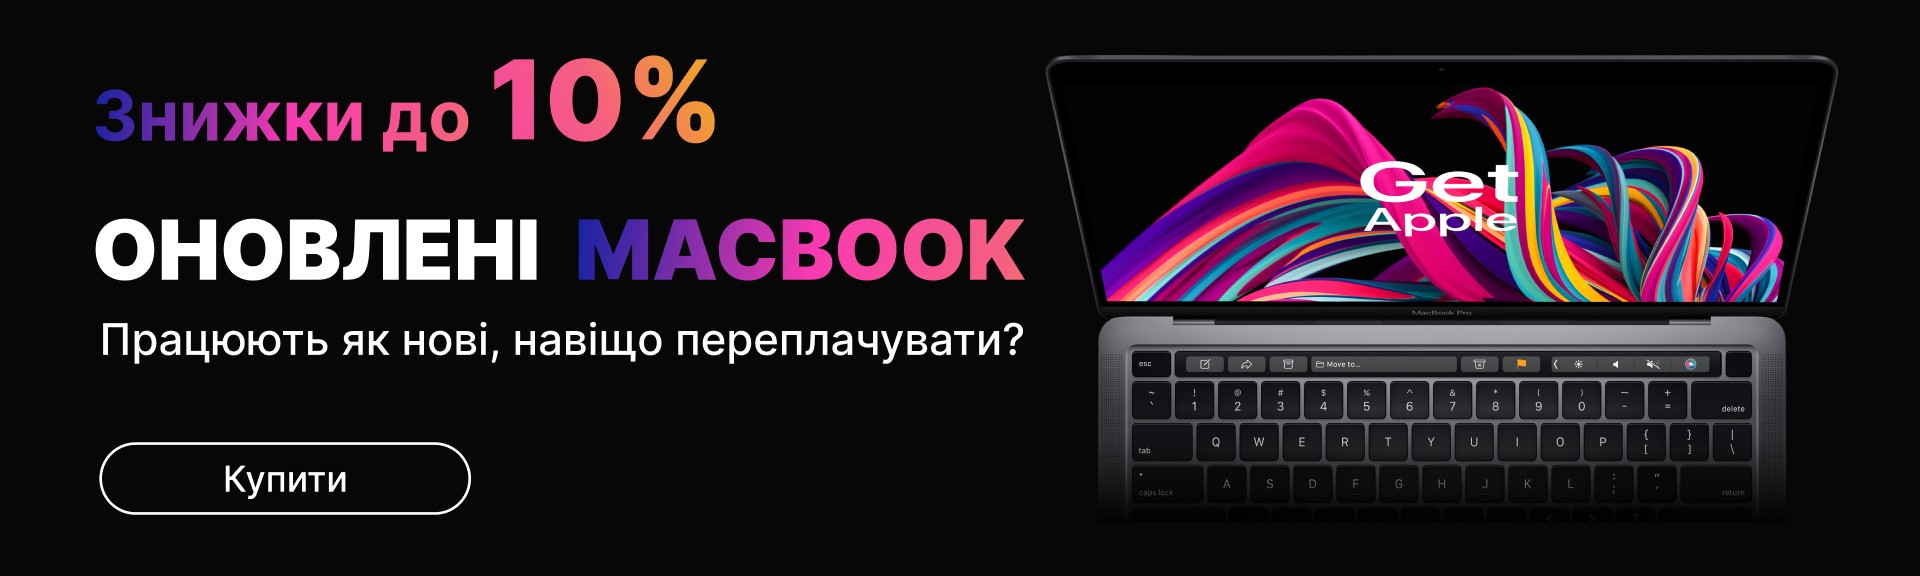 Ноутбук Macbook